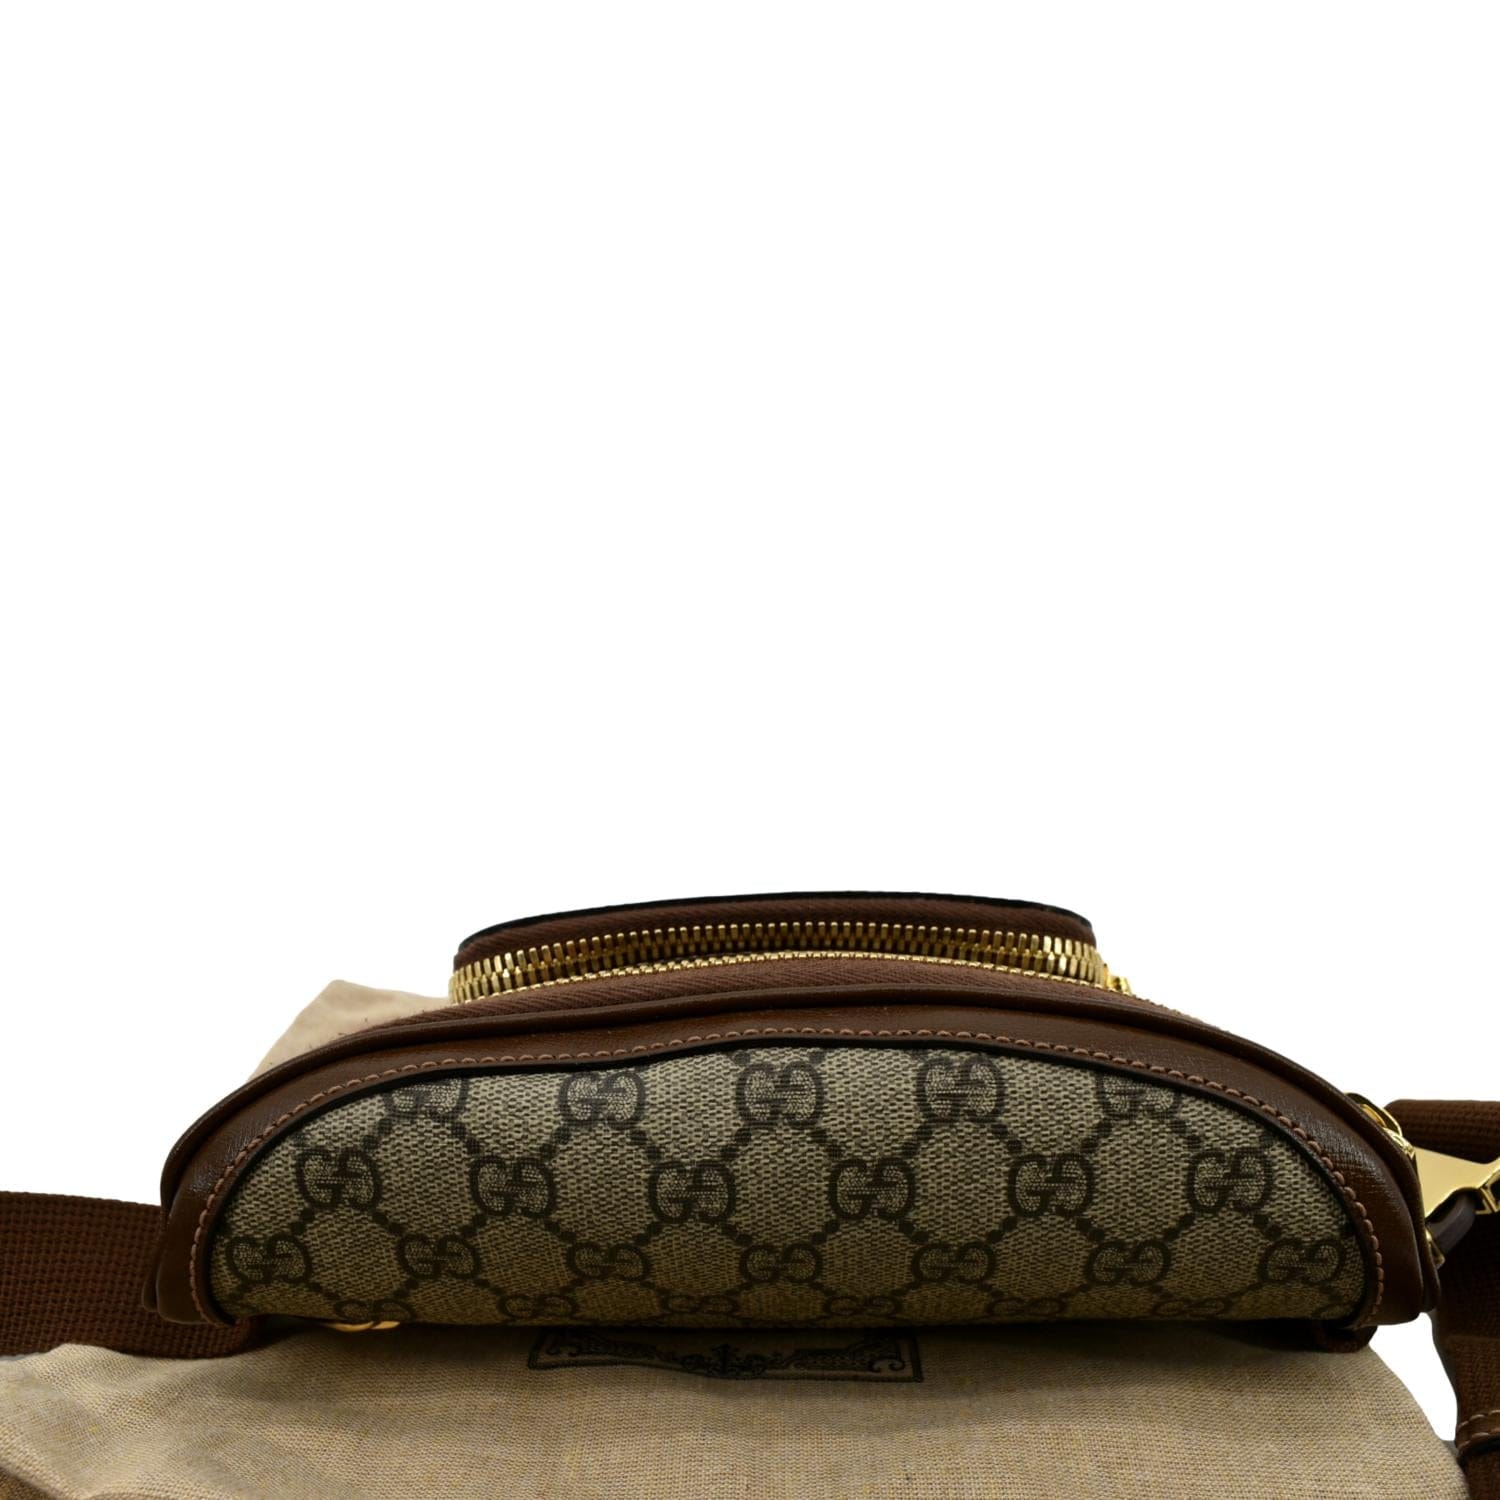 Belt bag with Interlocking G in GG Supreme